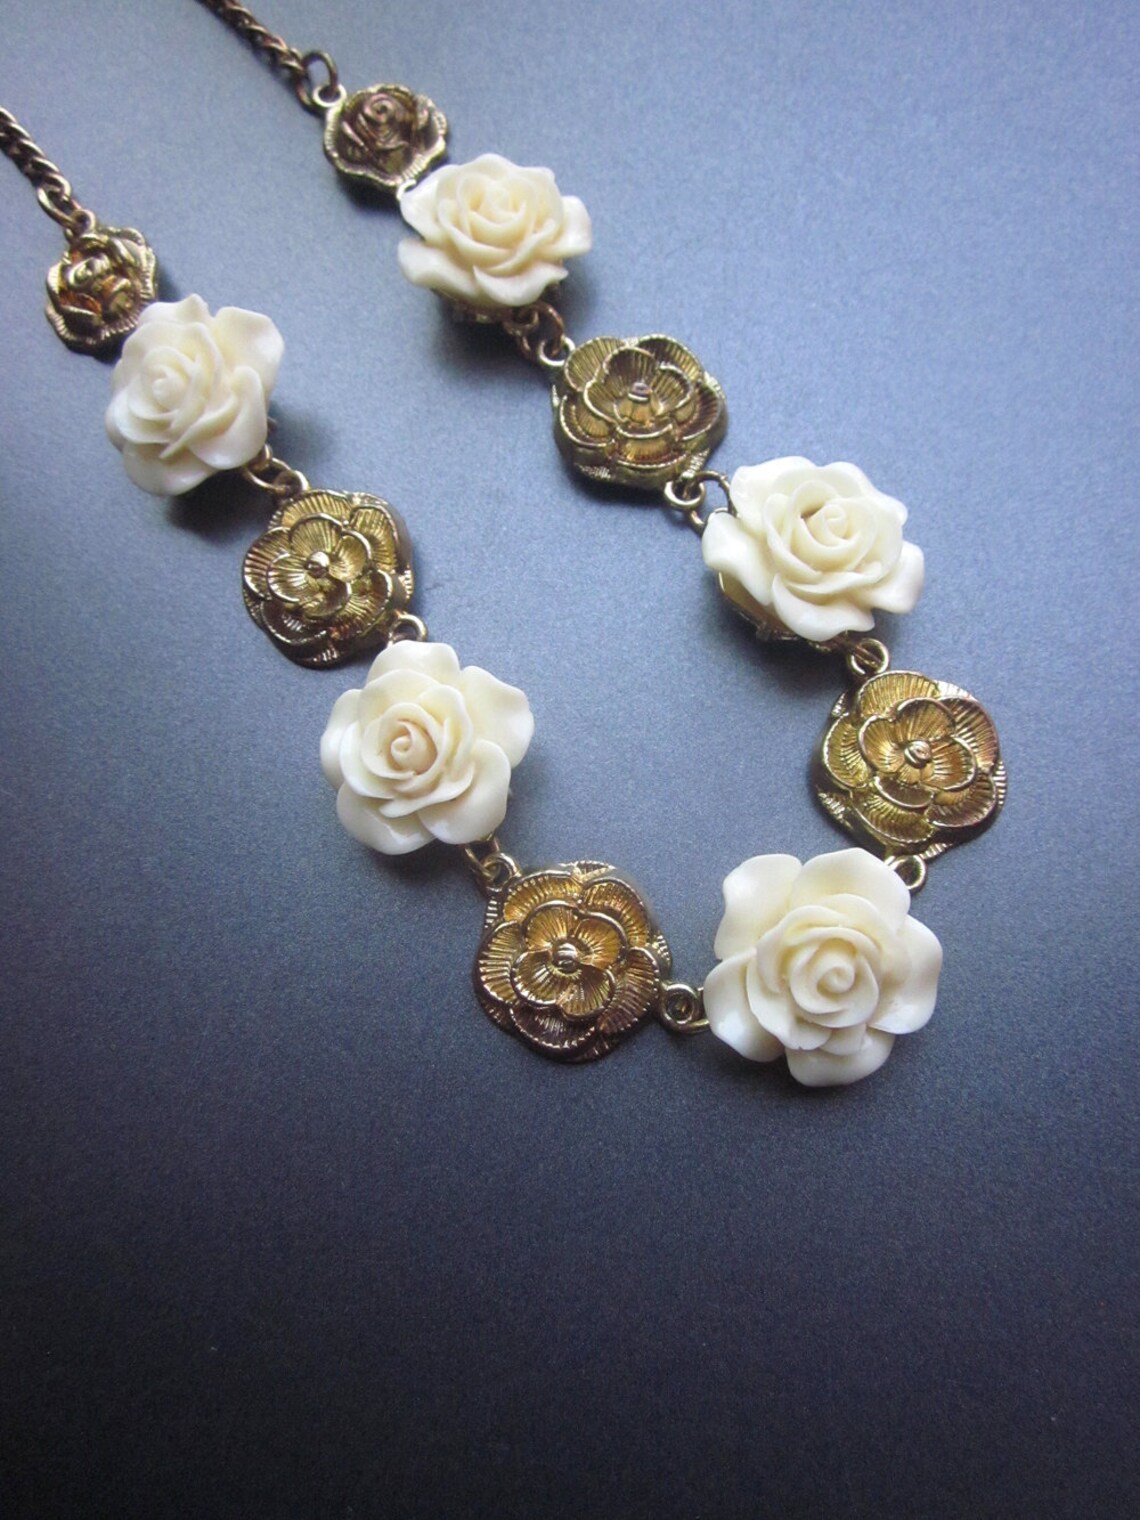 Vintage Rose Necklace Celluloid Formed White Roses | Etsy